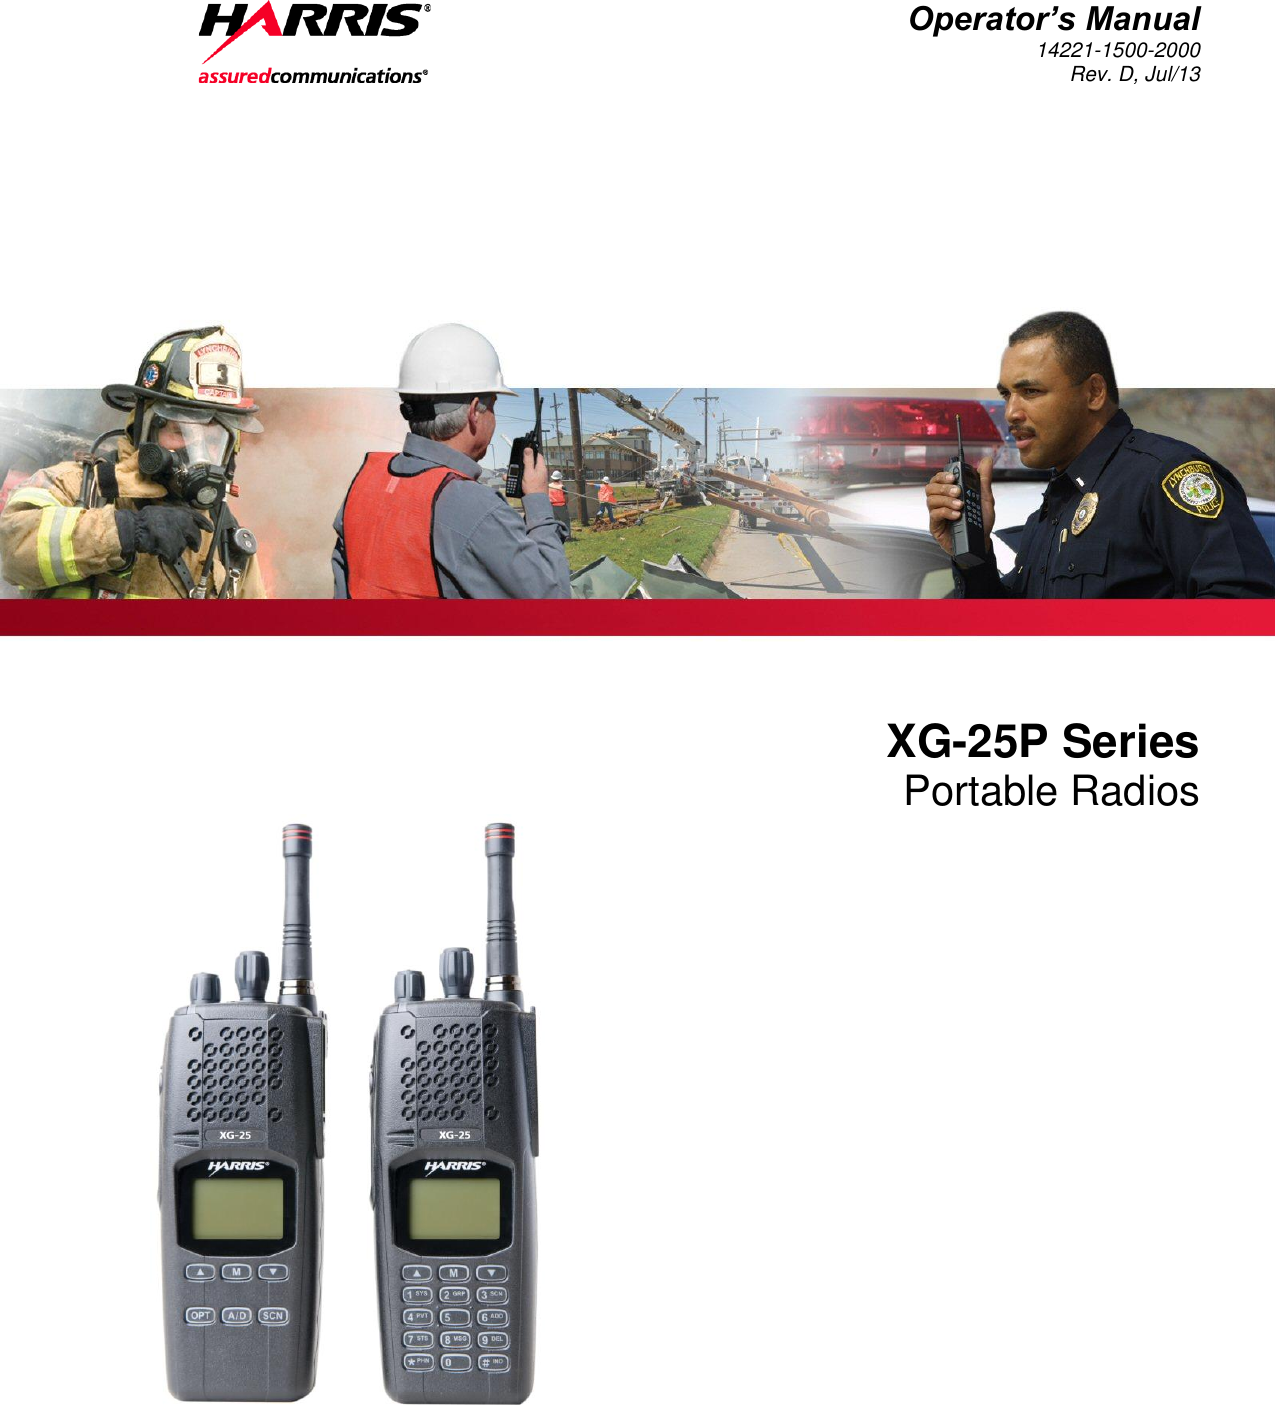  Operator’s Manual 14221-1500-2000 Rev. D, Jul/13    XG-25P Series Portable Radios  